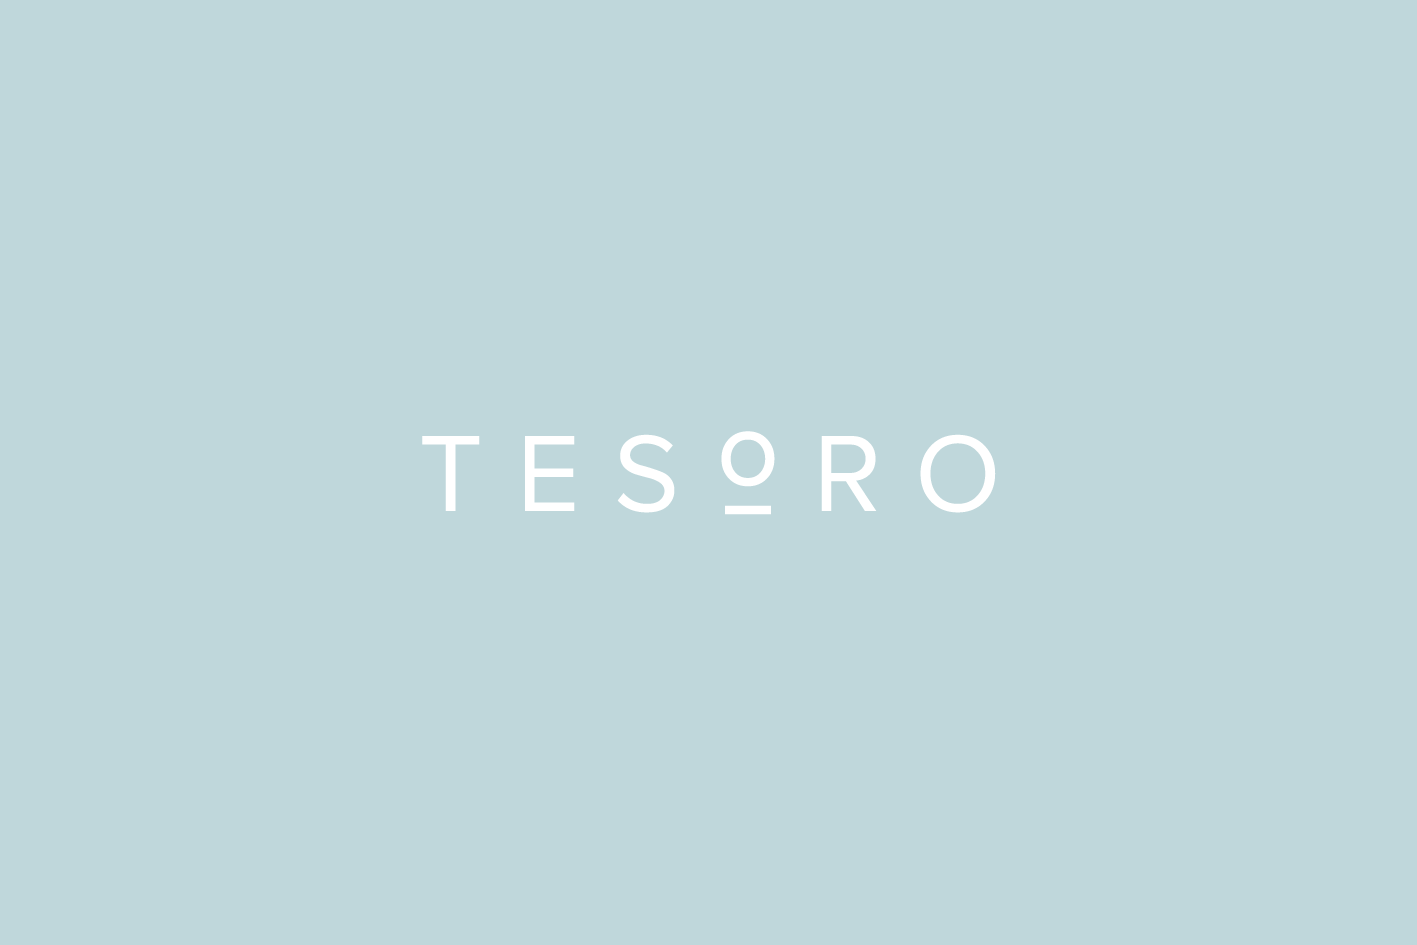 Tesoro Logo - Tesoro Logo & Pearls